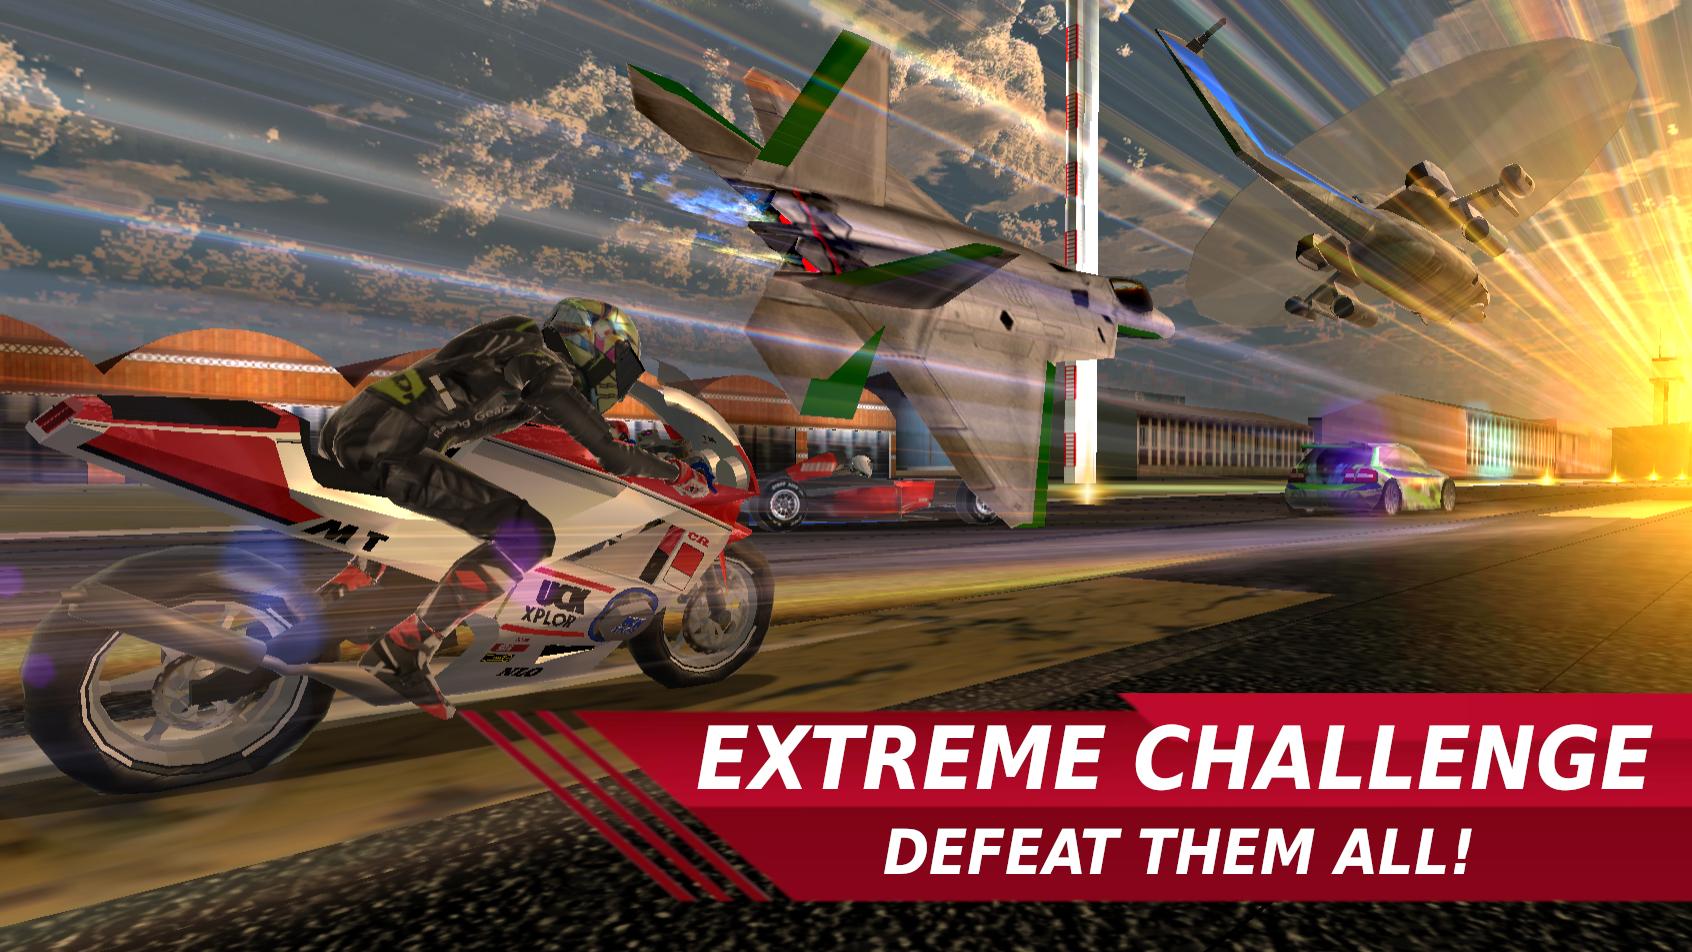 Rebel Gears Drag Bike Racing / CSR Race Moto Game 1.3.2 Screenshot 7